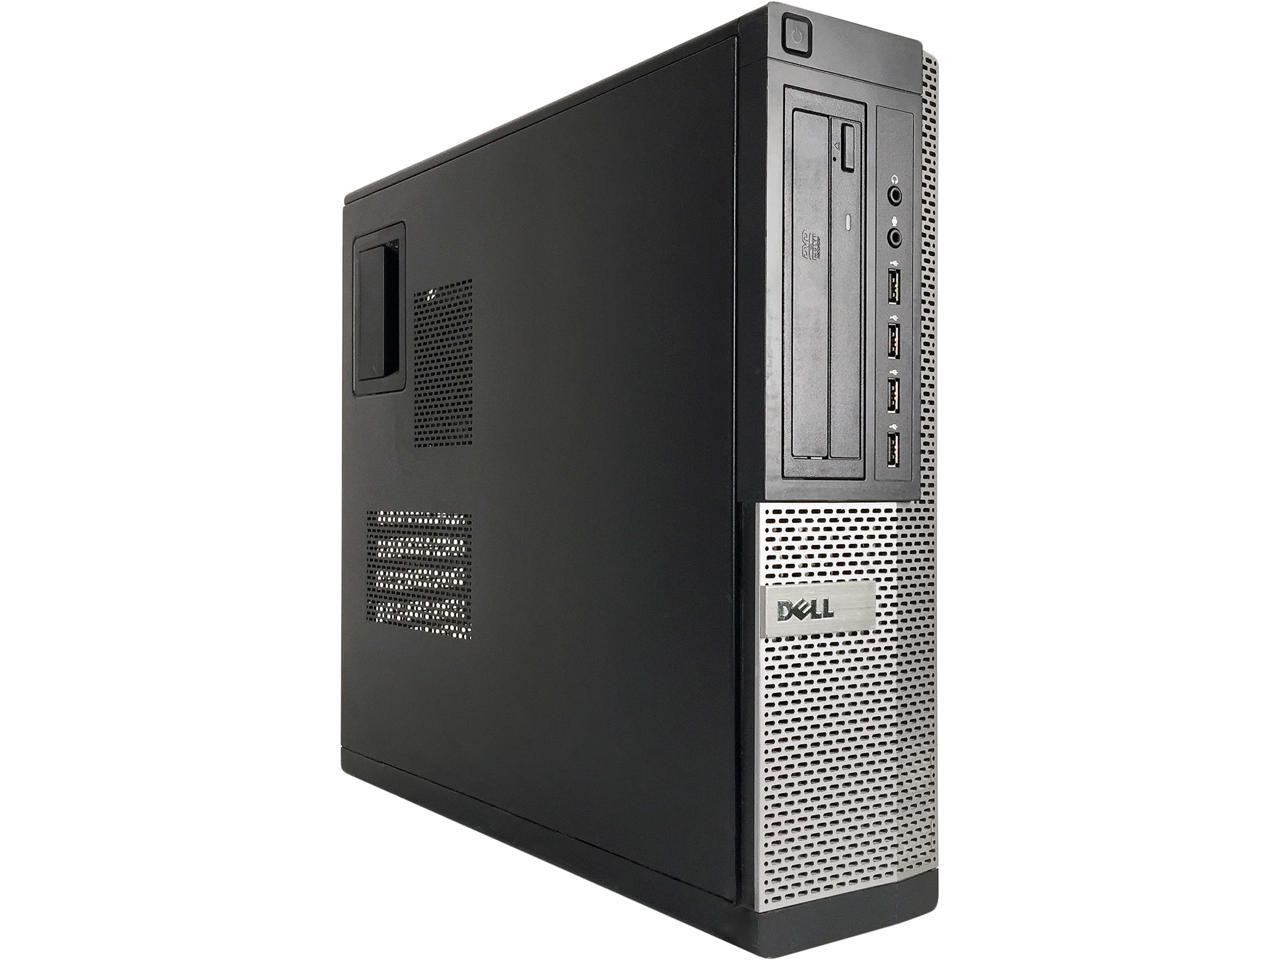 Dell Grade A OptiPlex 790 Desktop Computer, Intel Core i7 2600 (3.40 GHz), 16GB DDR3, 500G, DVD, USB WIFI Adapter, USB Bluetooth Adapter, Windows 10 Home 64-bit Multi-language